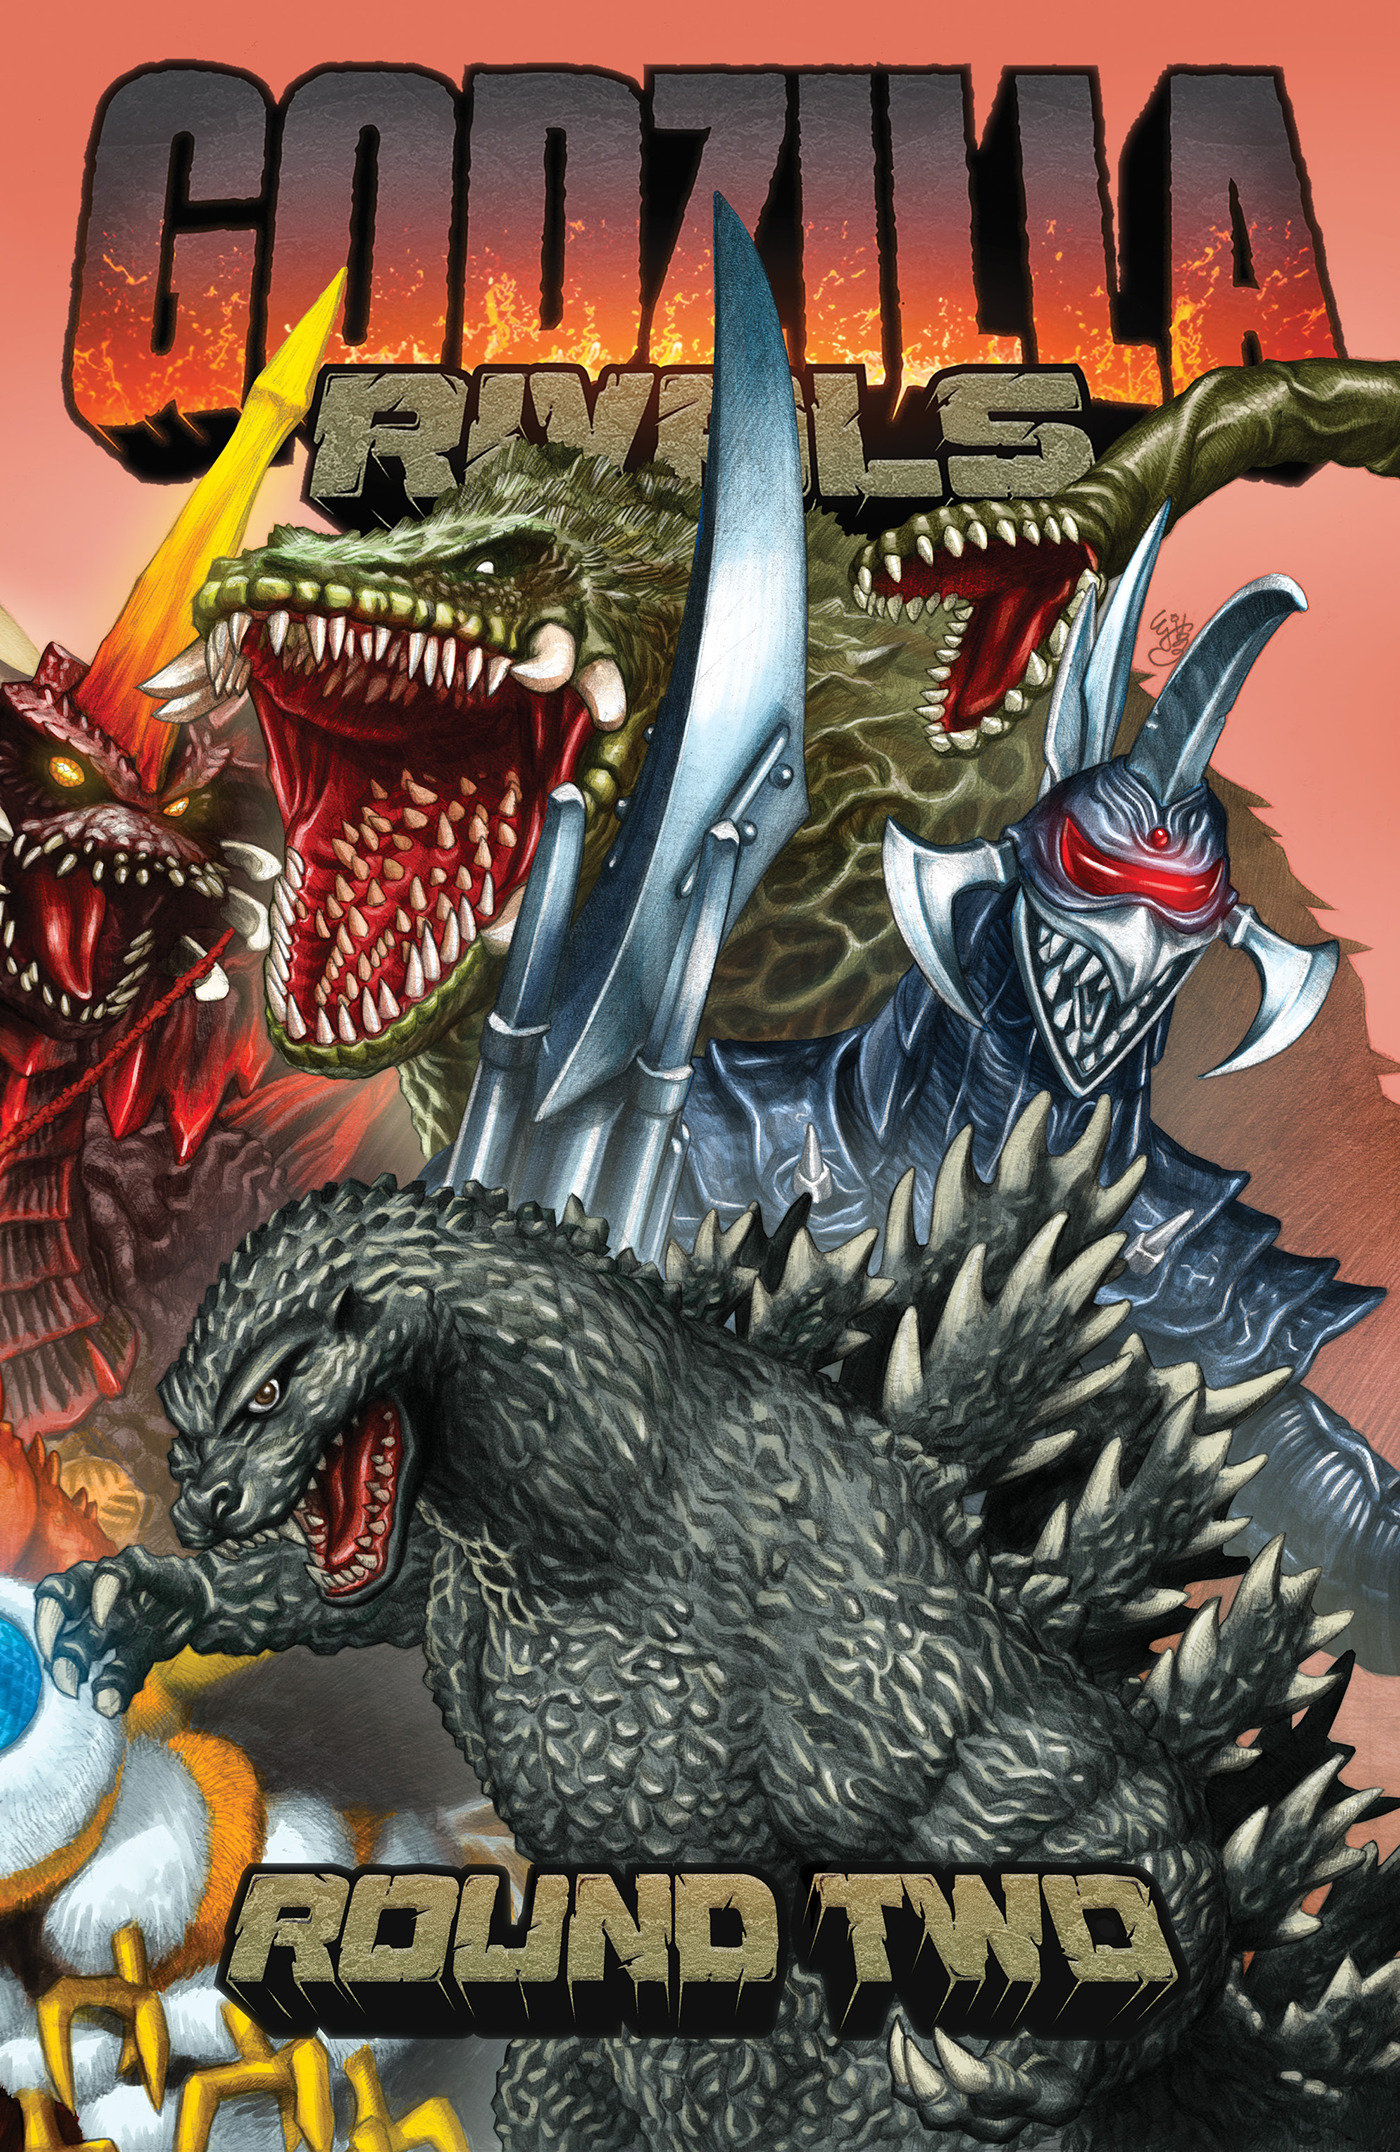 Godzilla Rivals: Round Two Graphic Novel